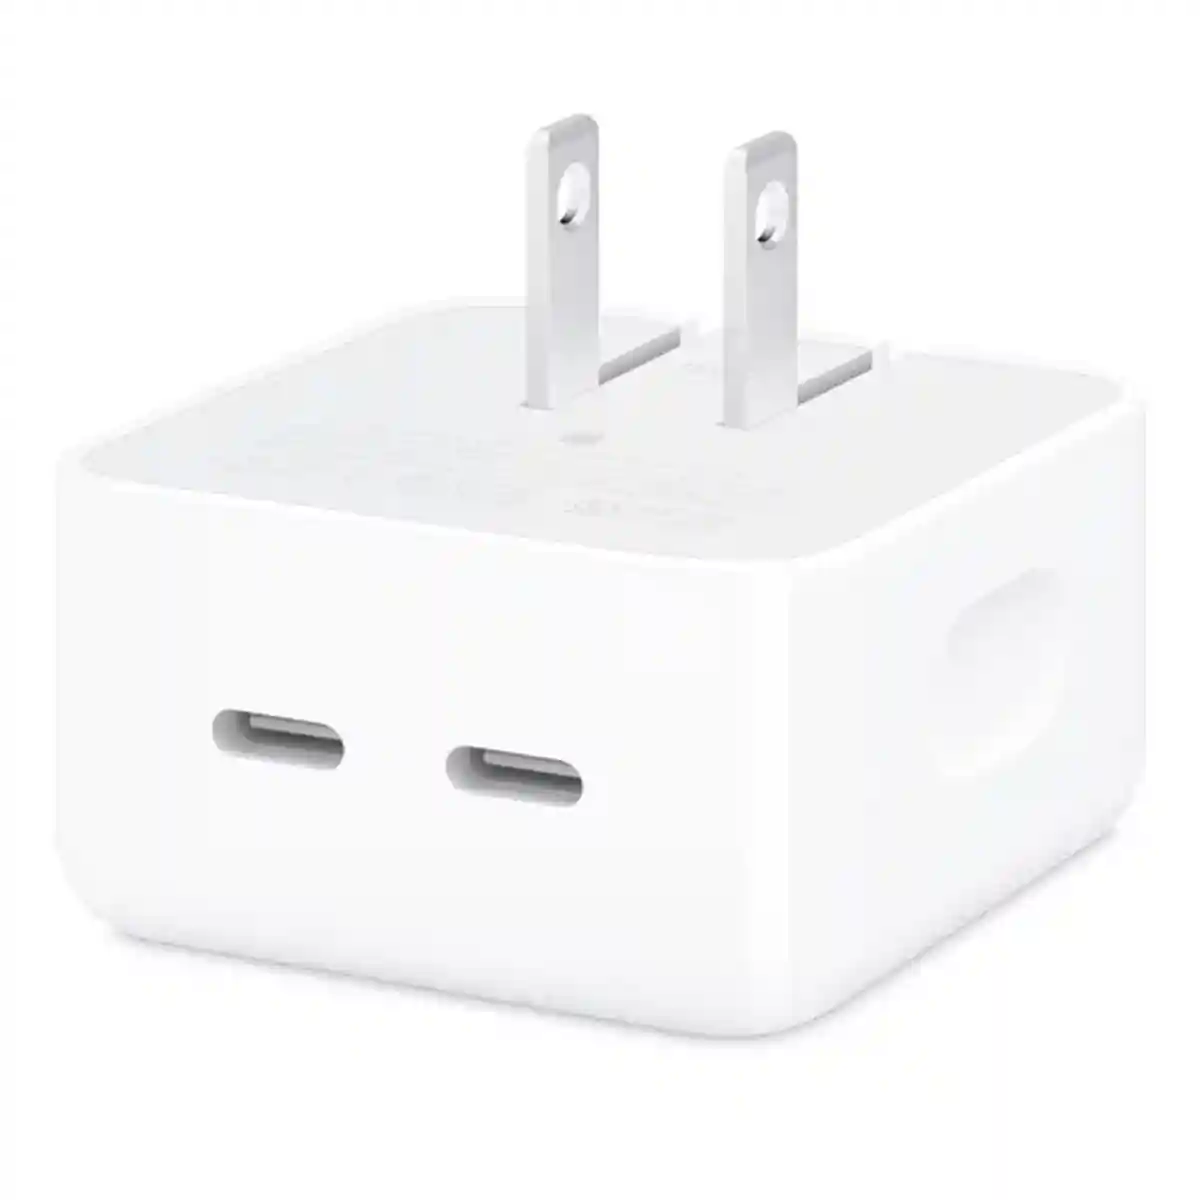 Блок питания с двумя портами USB Type-C от Apple. Фото: скриншот / apple.com